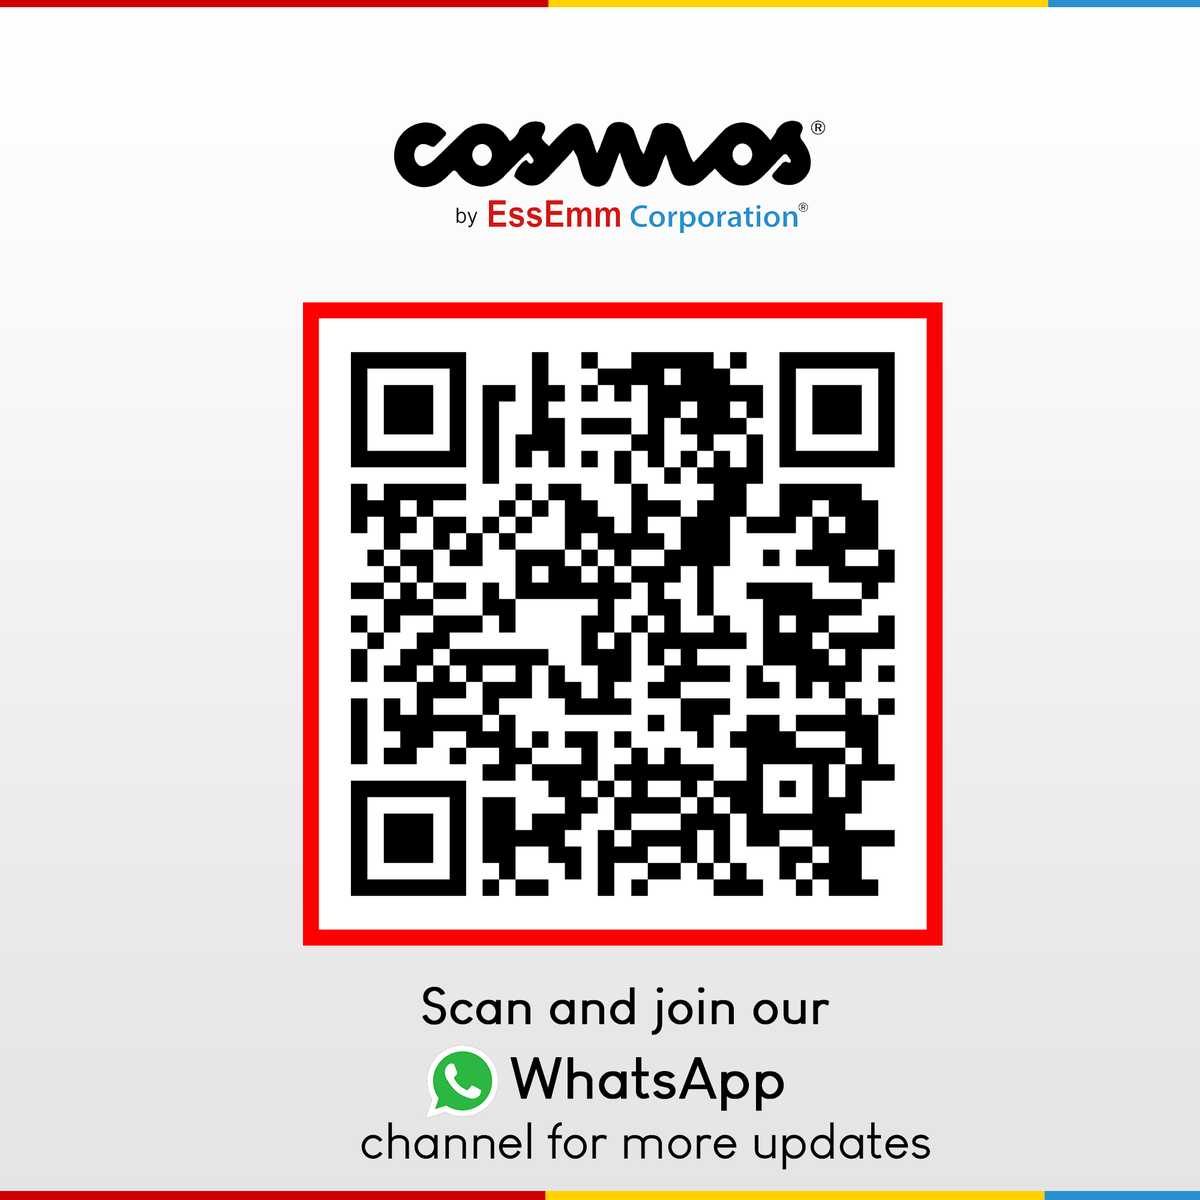 Scan and join 😃
#WhatsApp #commercialkitchen #industrialkitchen